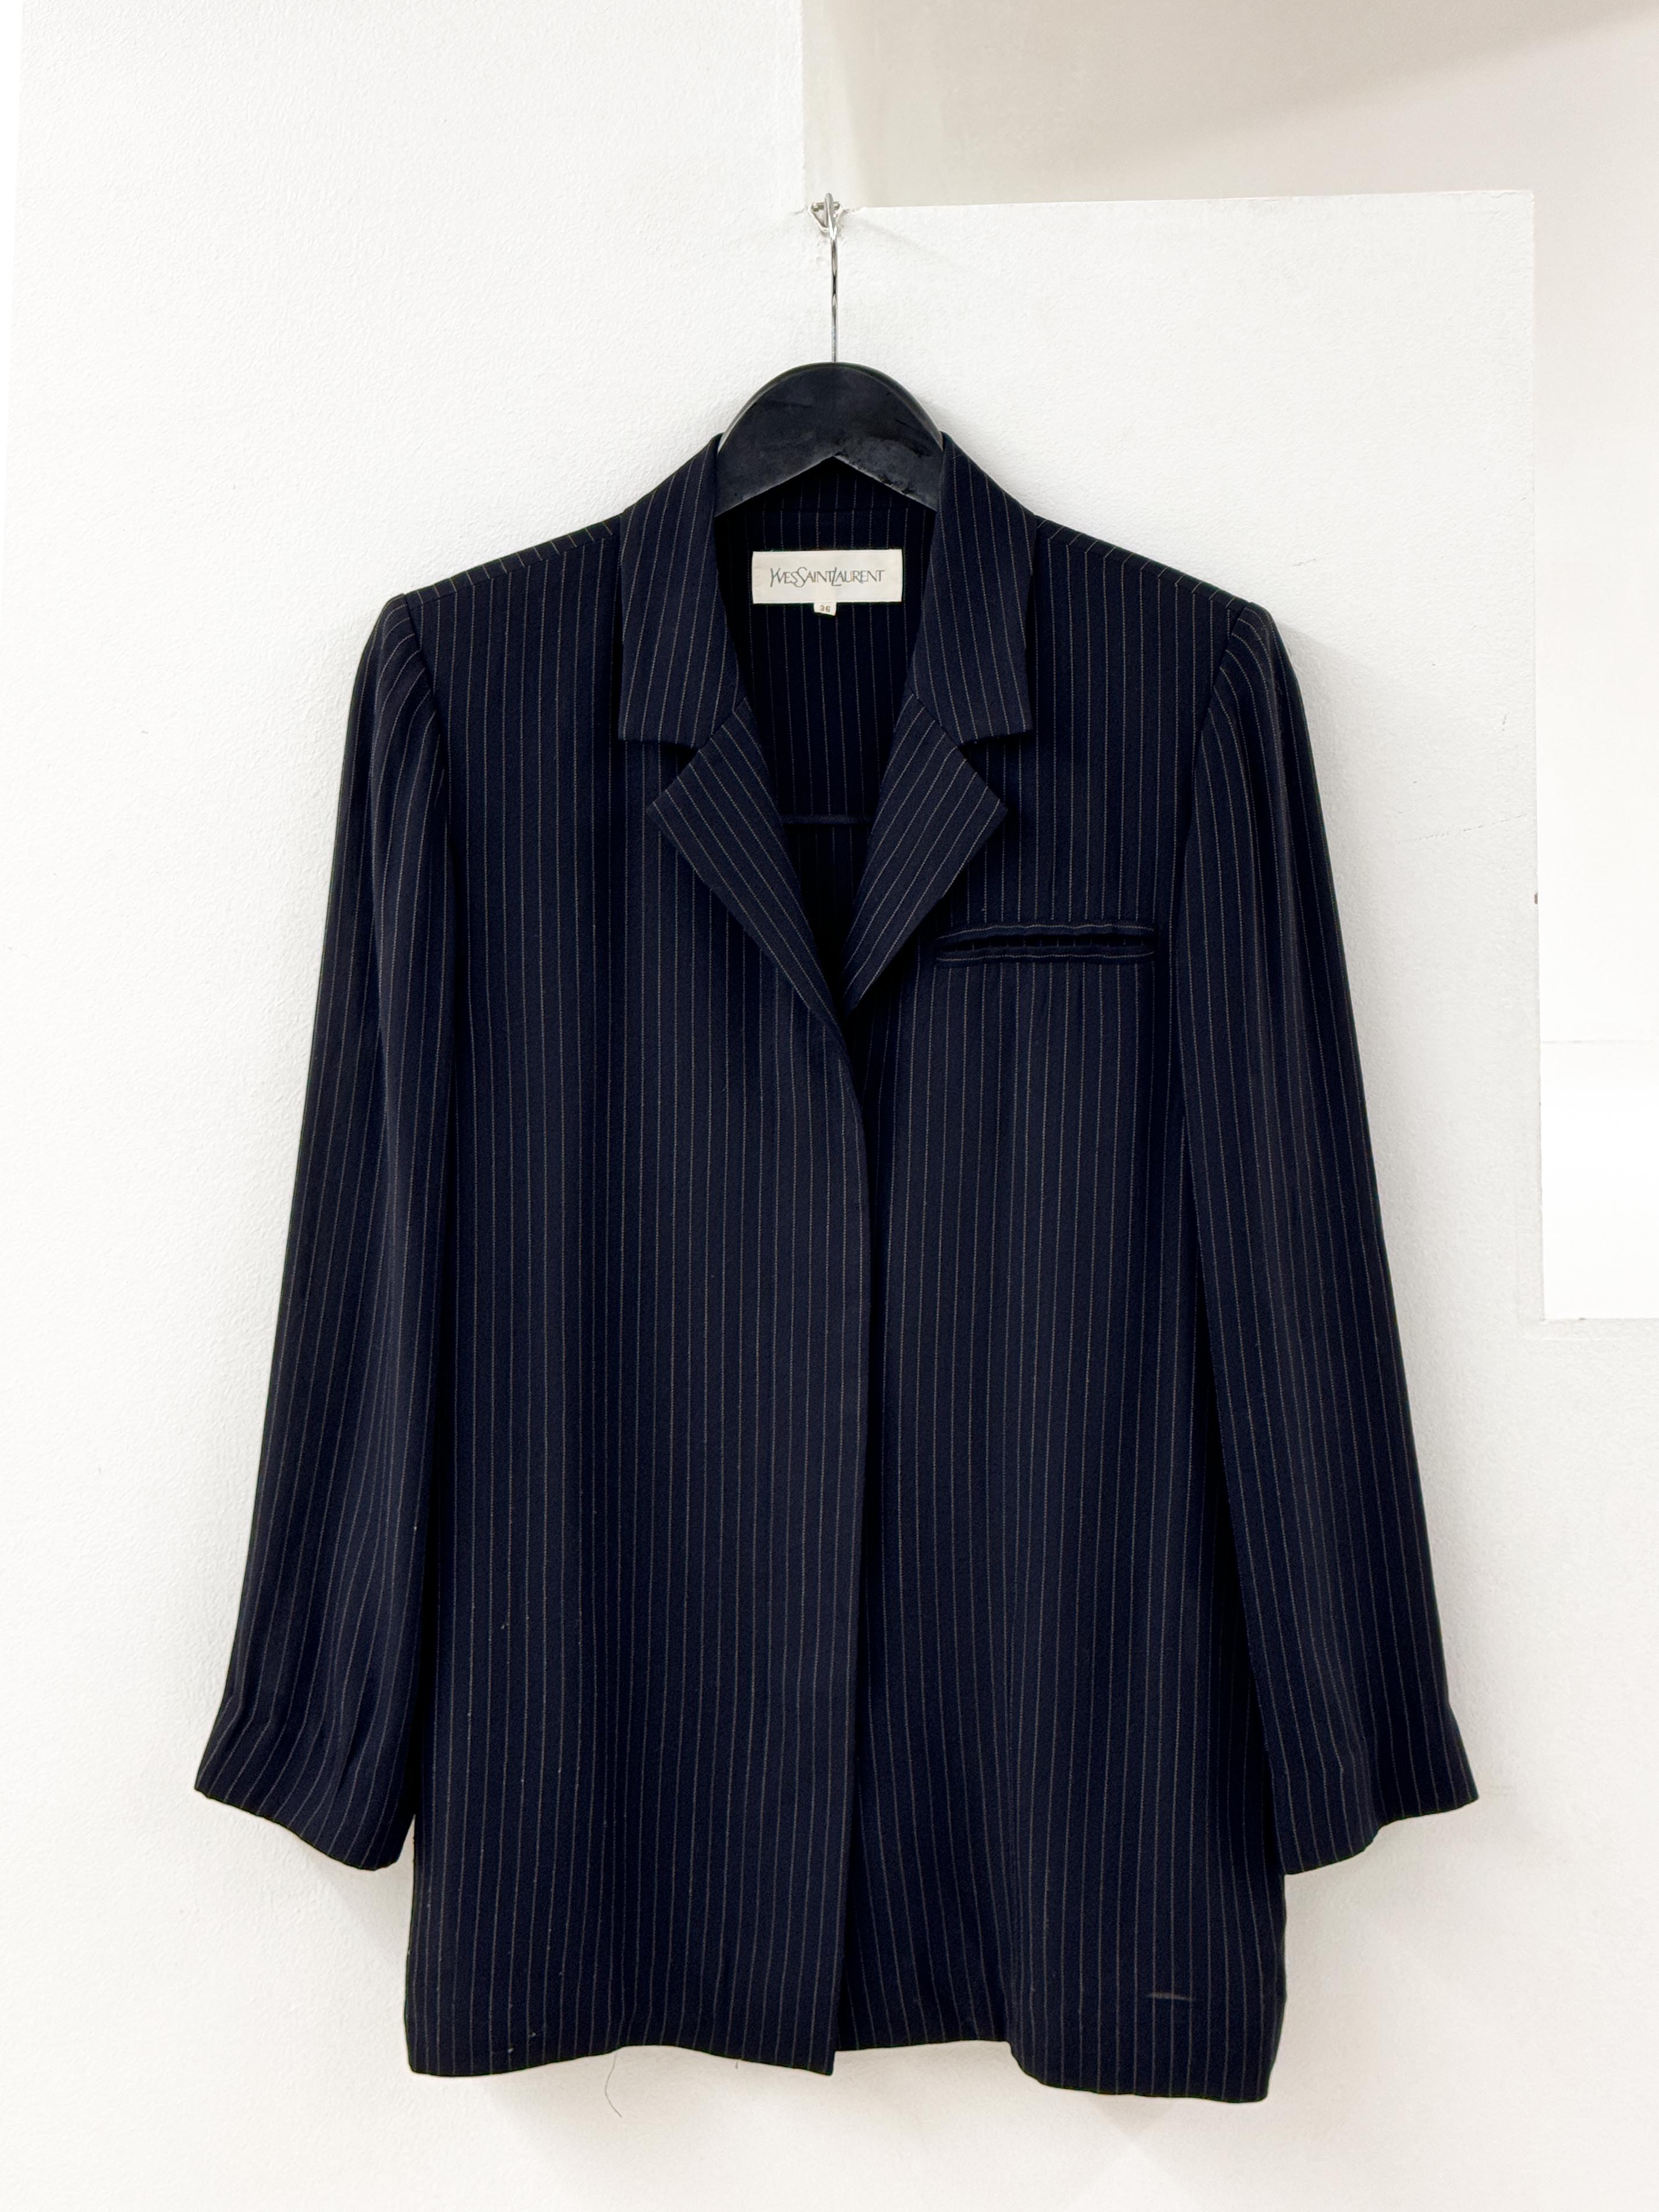 Yves Saint Laurent stripe jacket